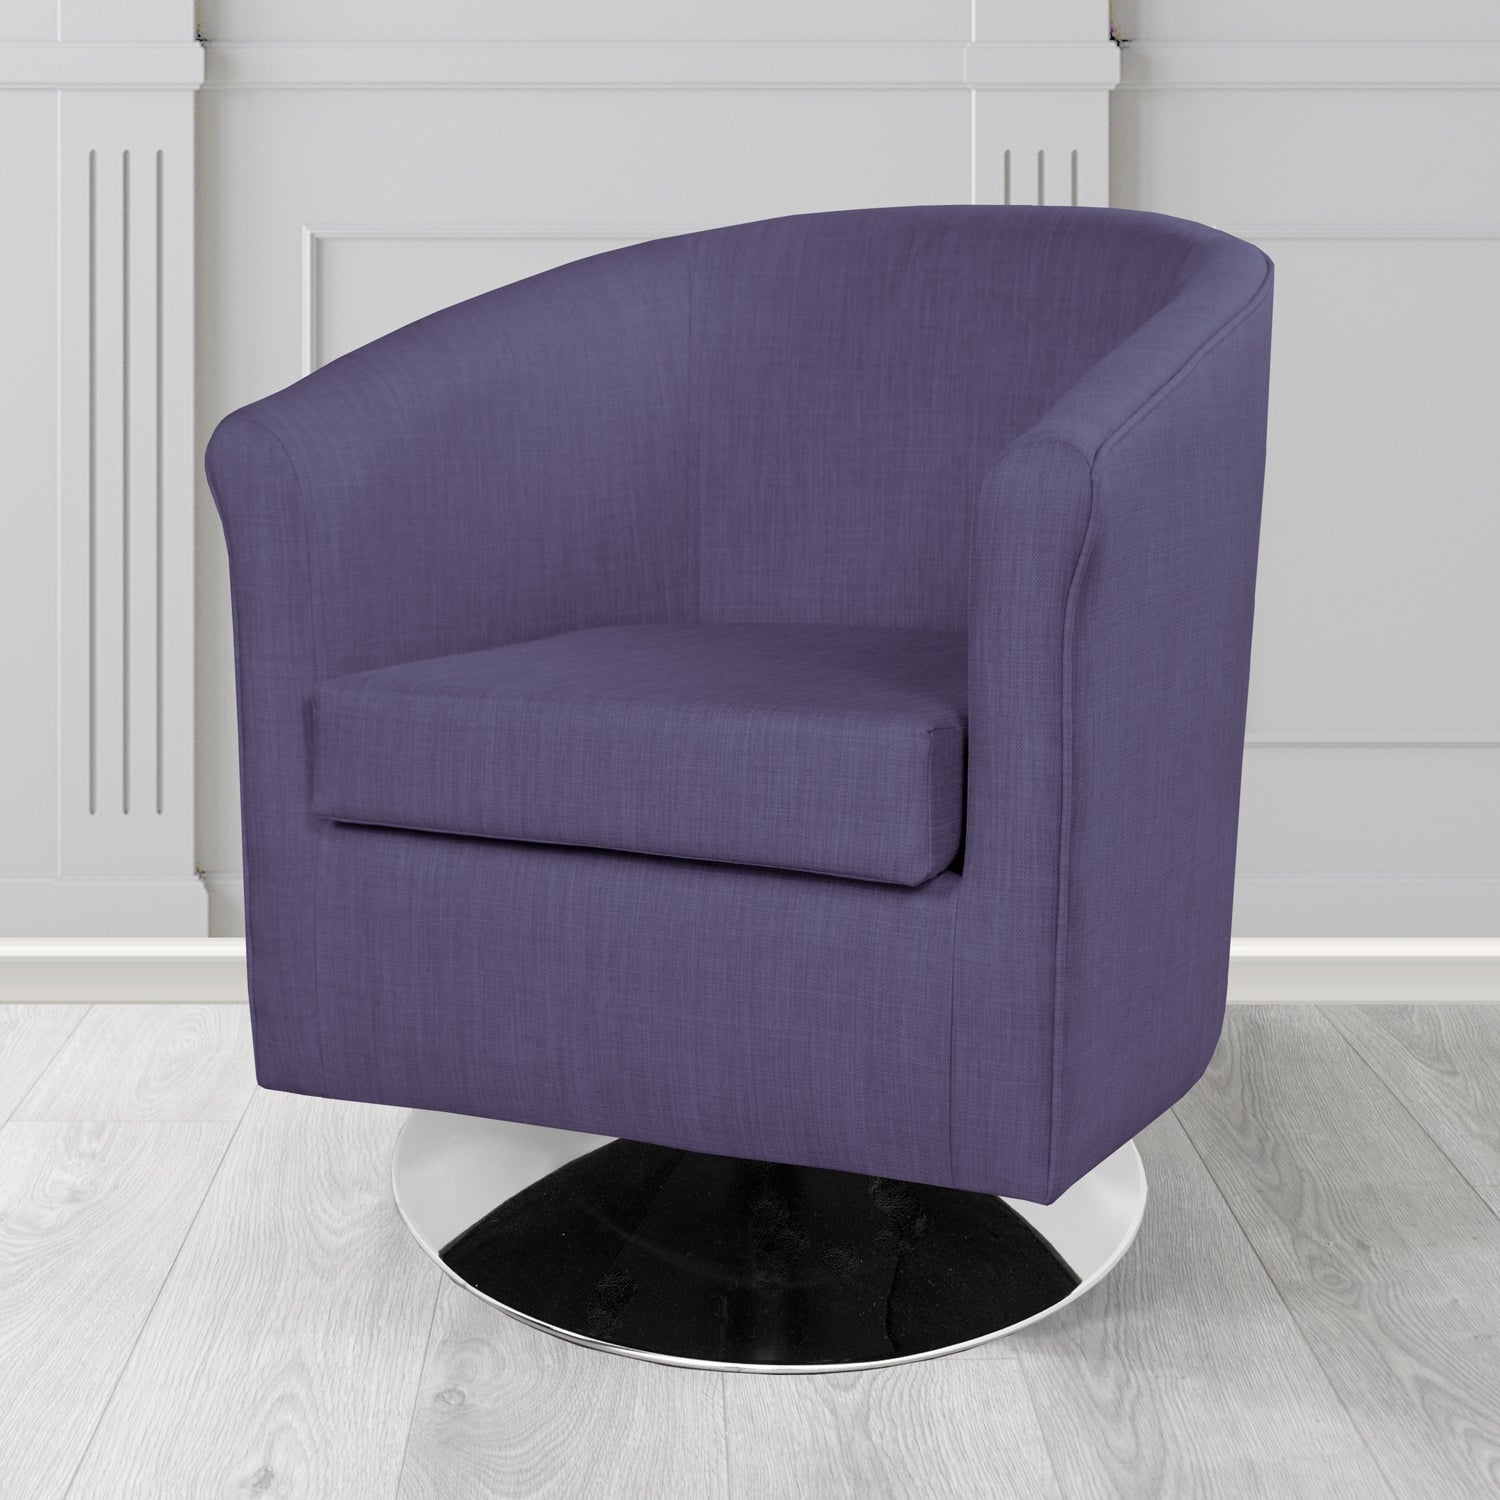 Tuscany Charles Purple Plain Linen Fabric Swivel Tub Chair - The Tub Chair Shop